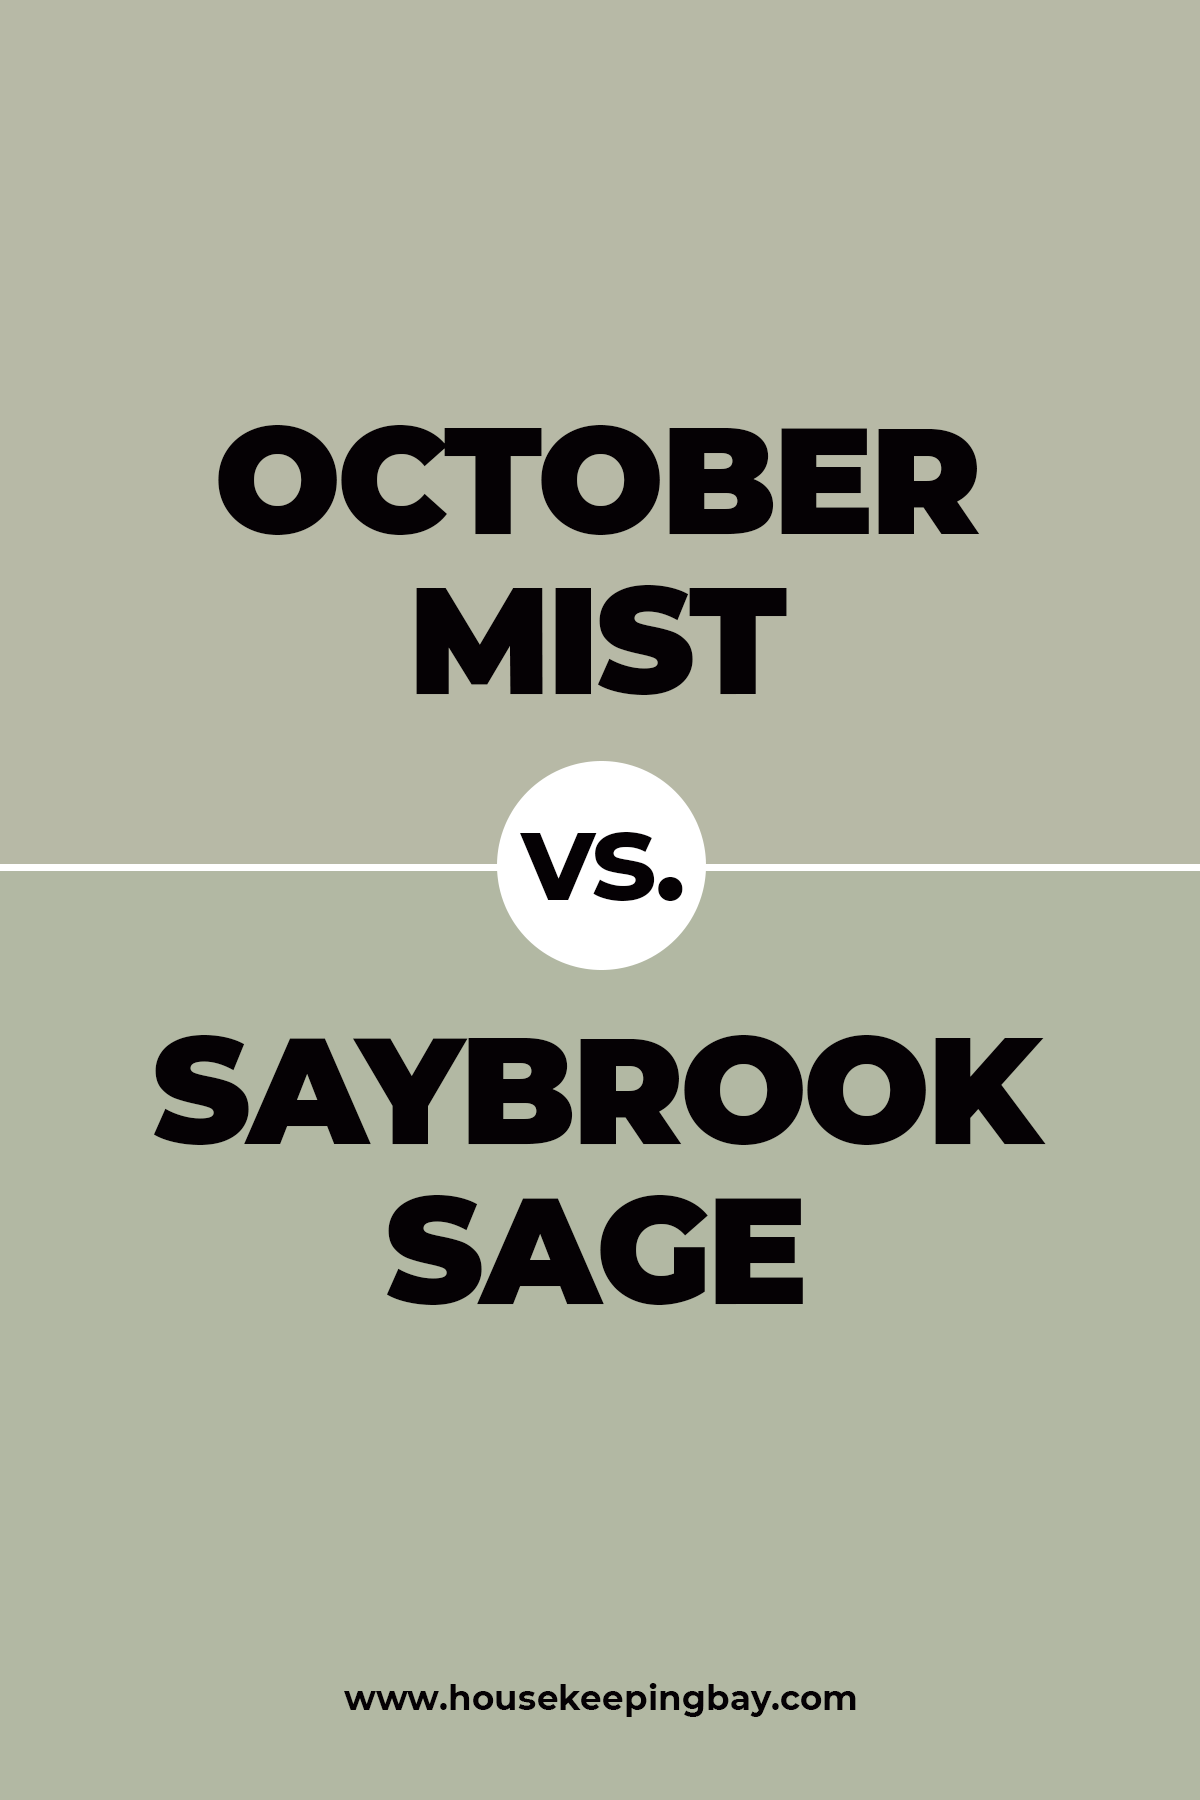 October Mist vs. saybrook sage